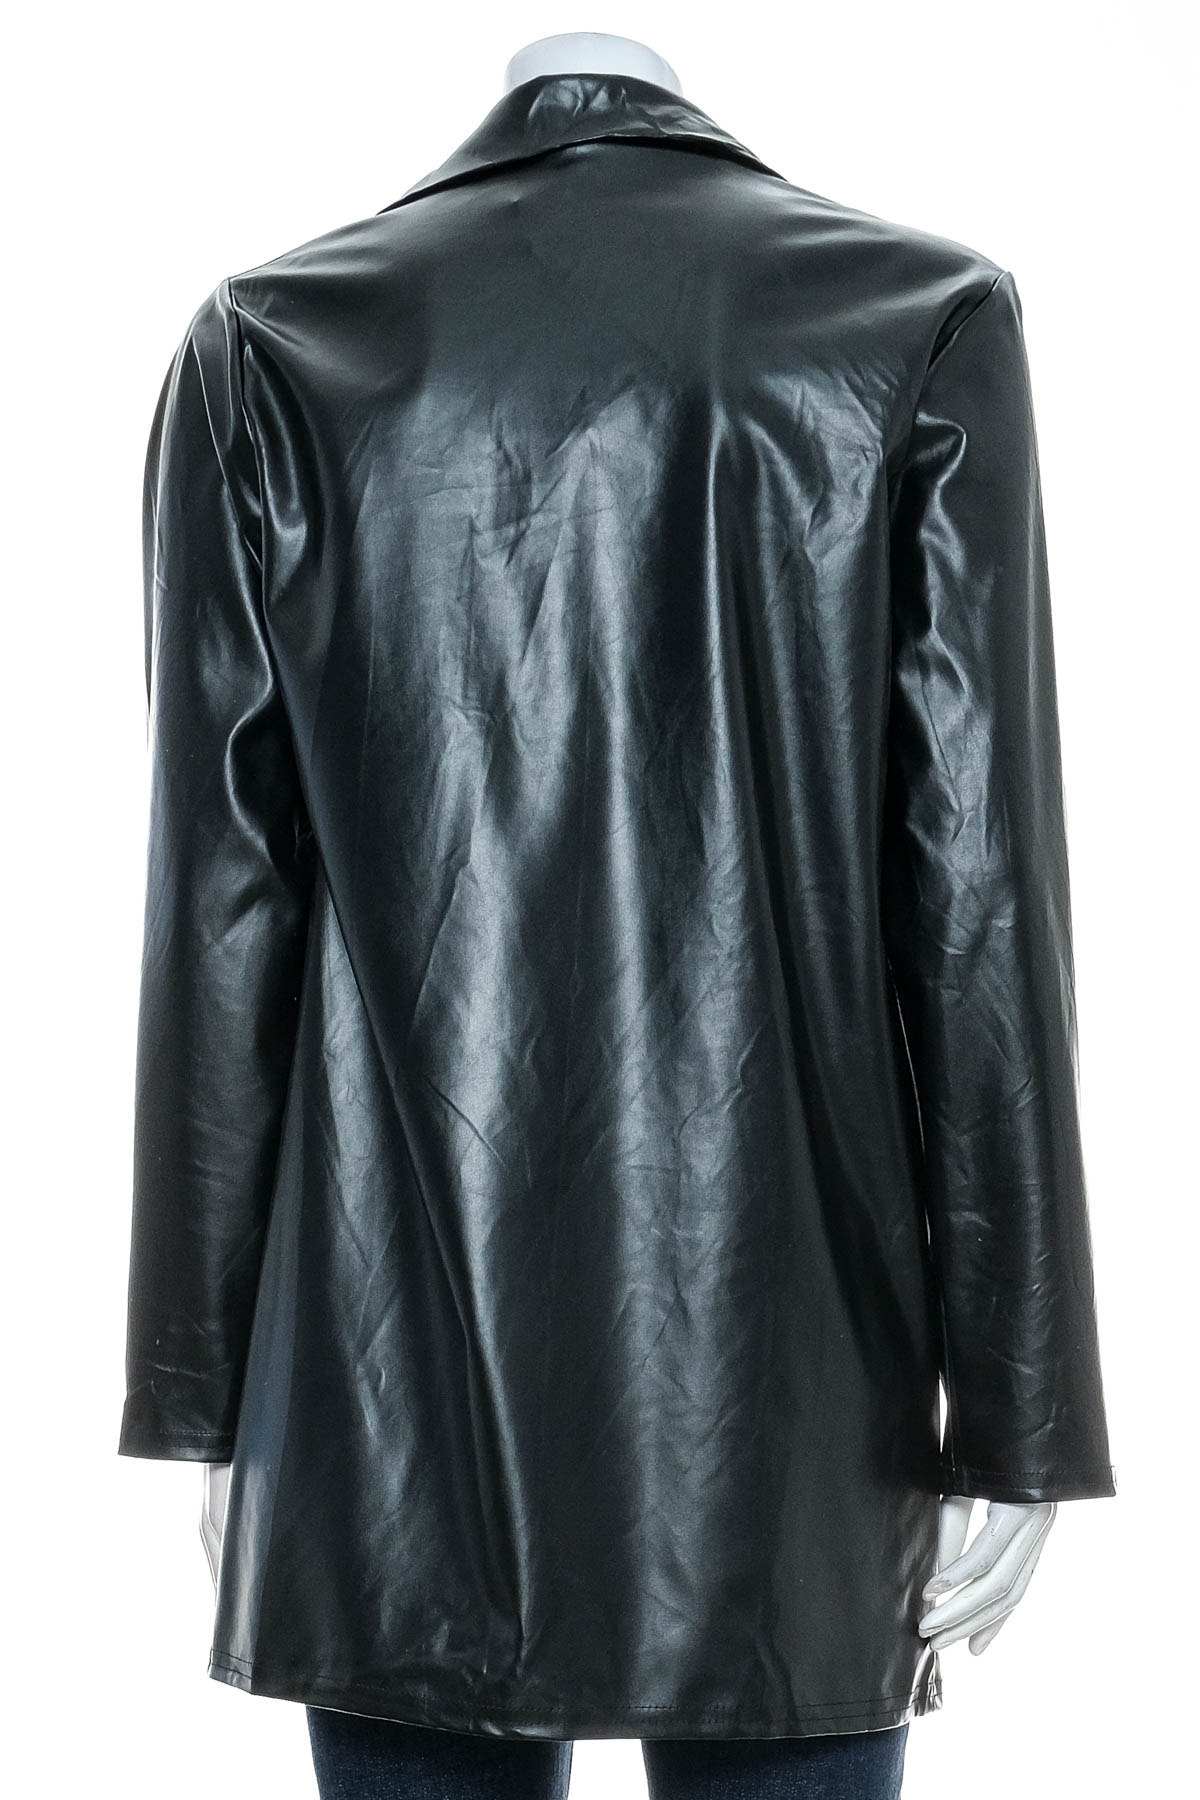 Women's leather blazer - PRETTYLITTLETHING - 1